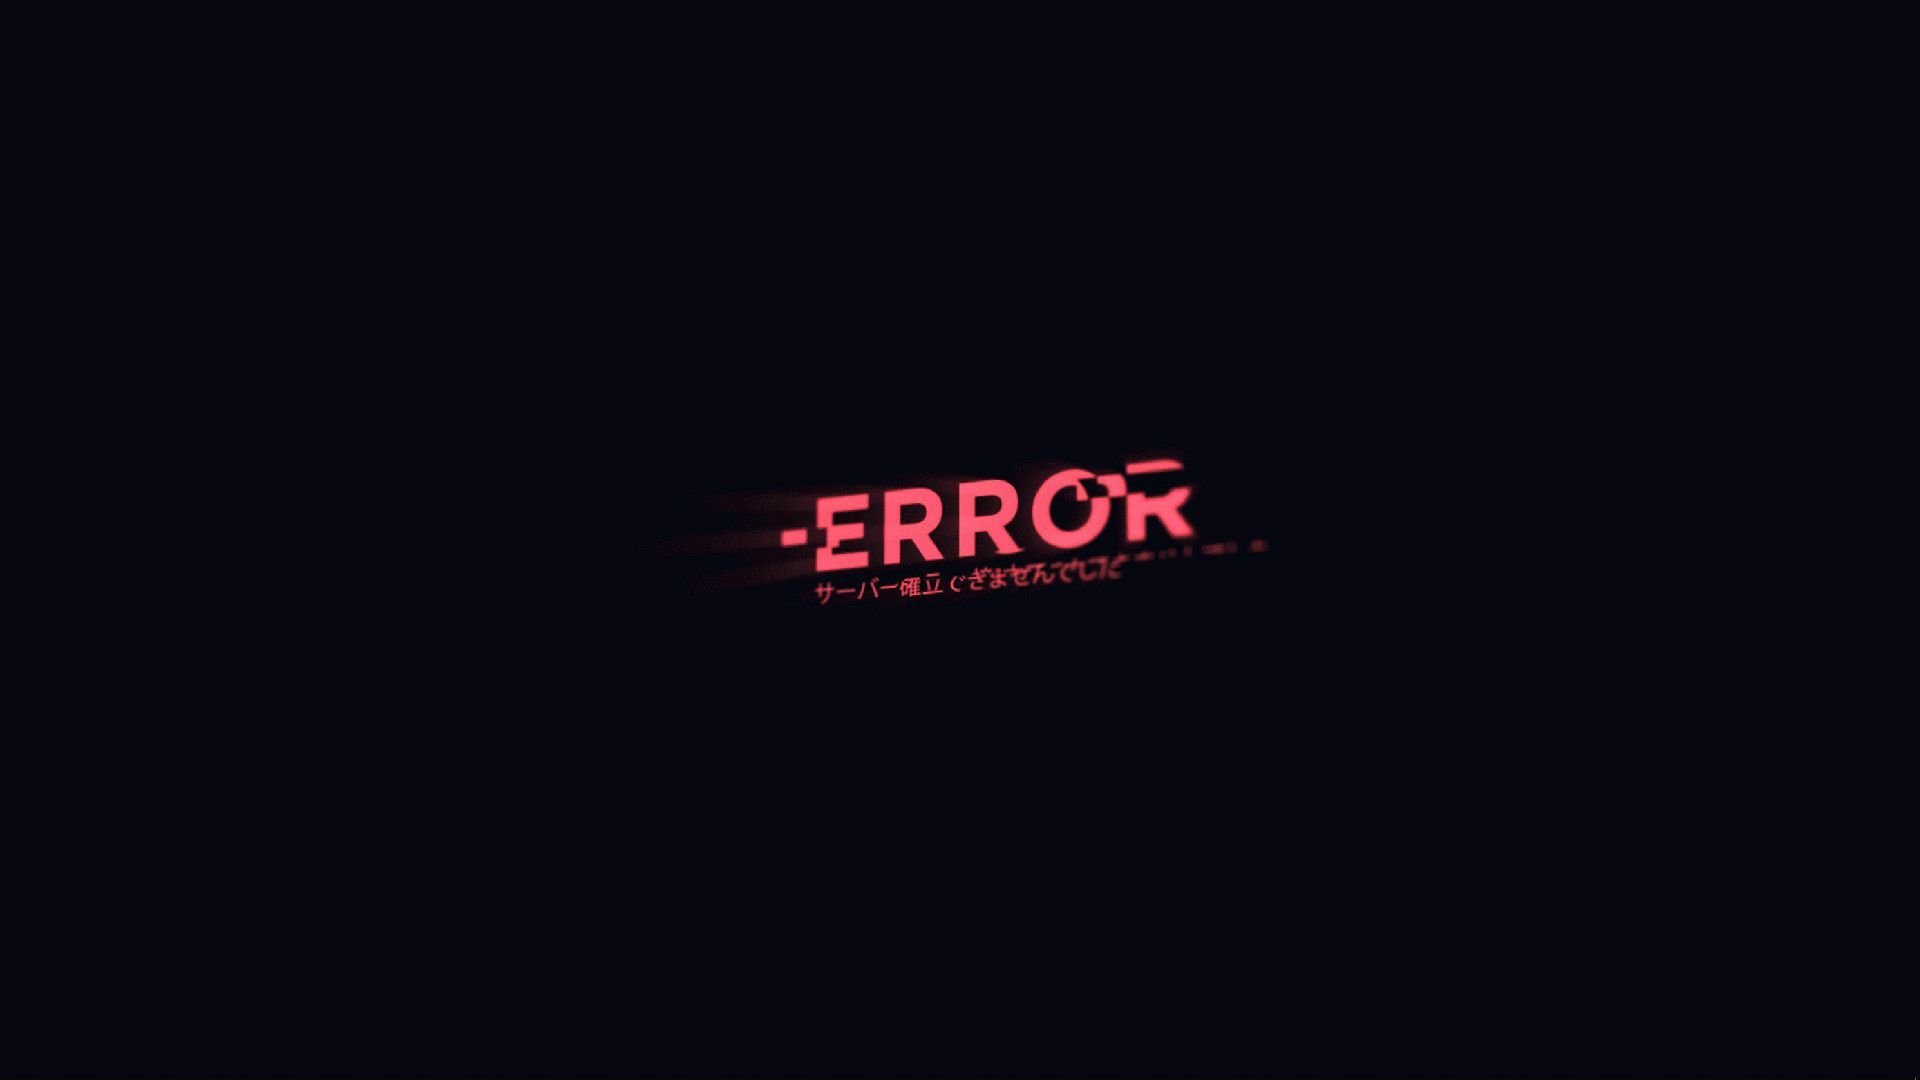 Error sits